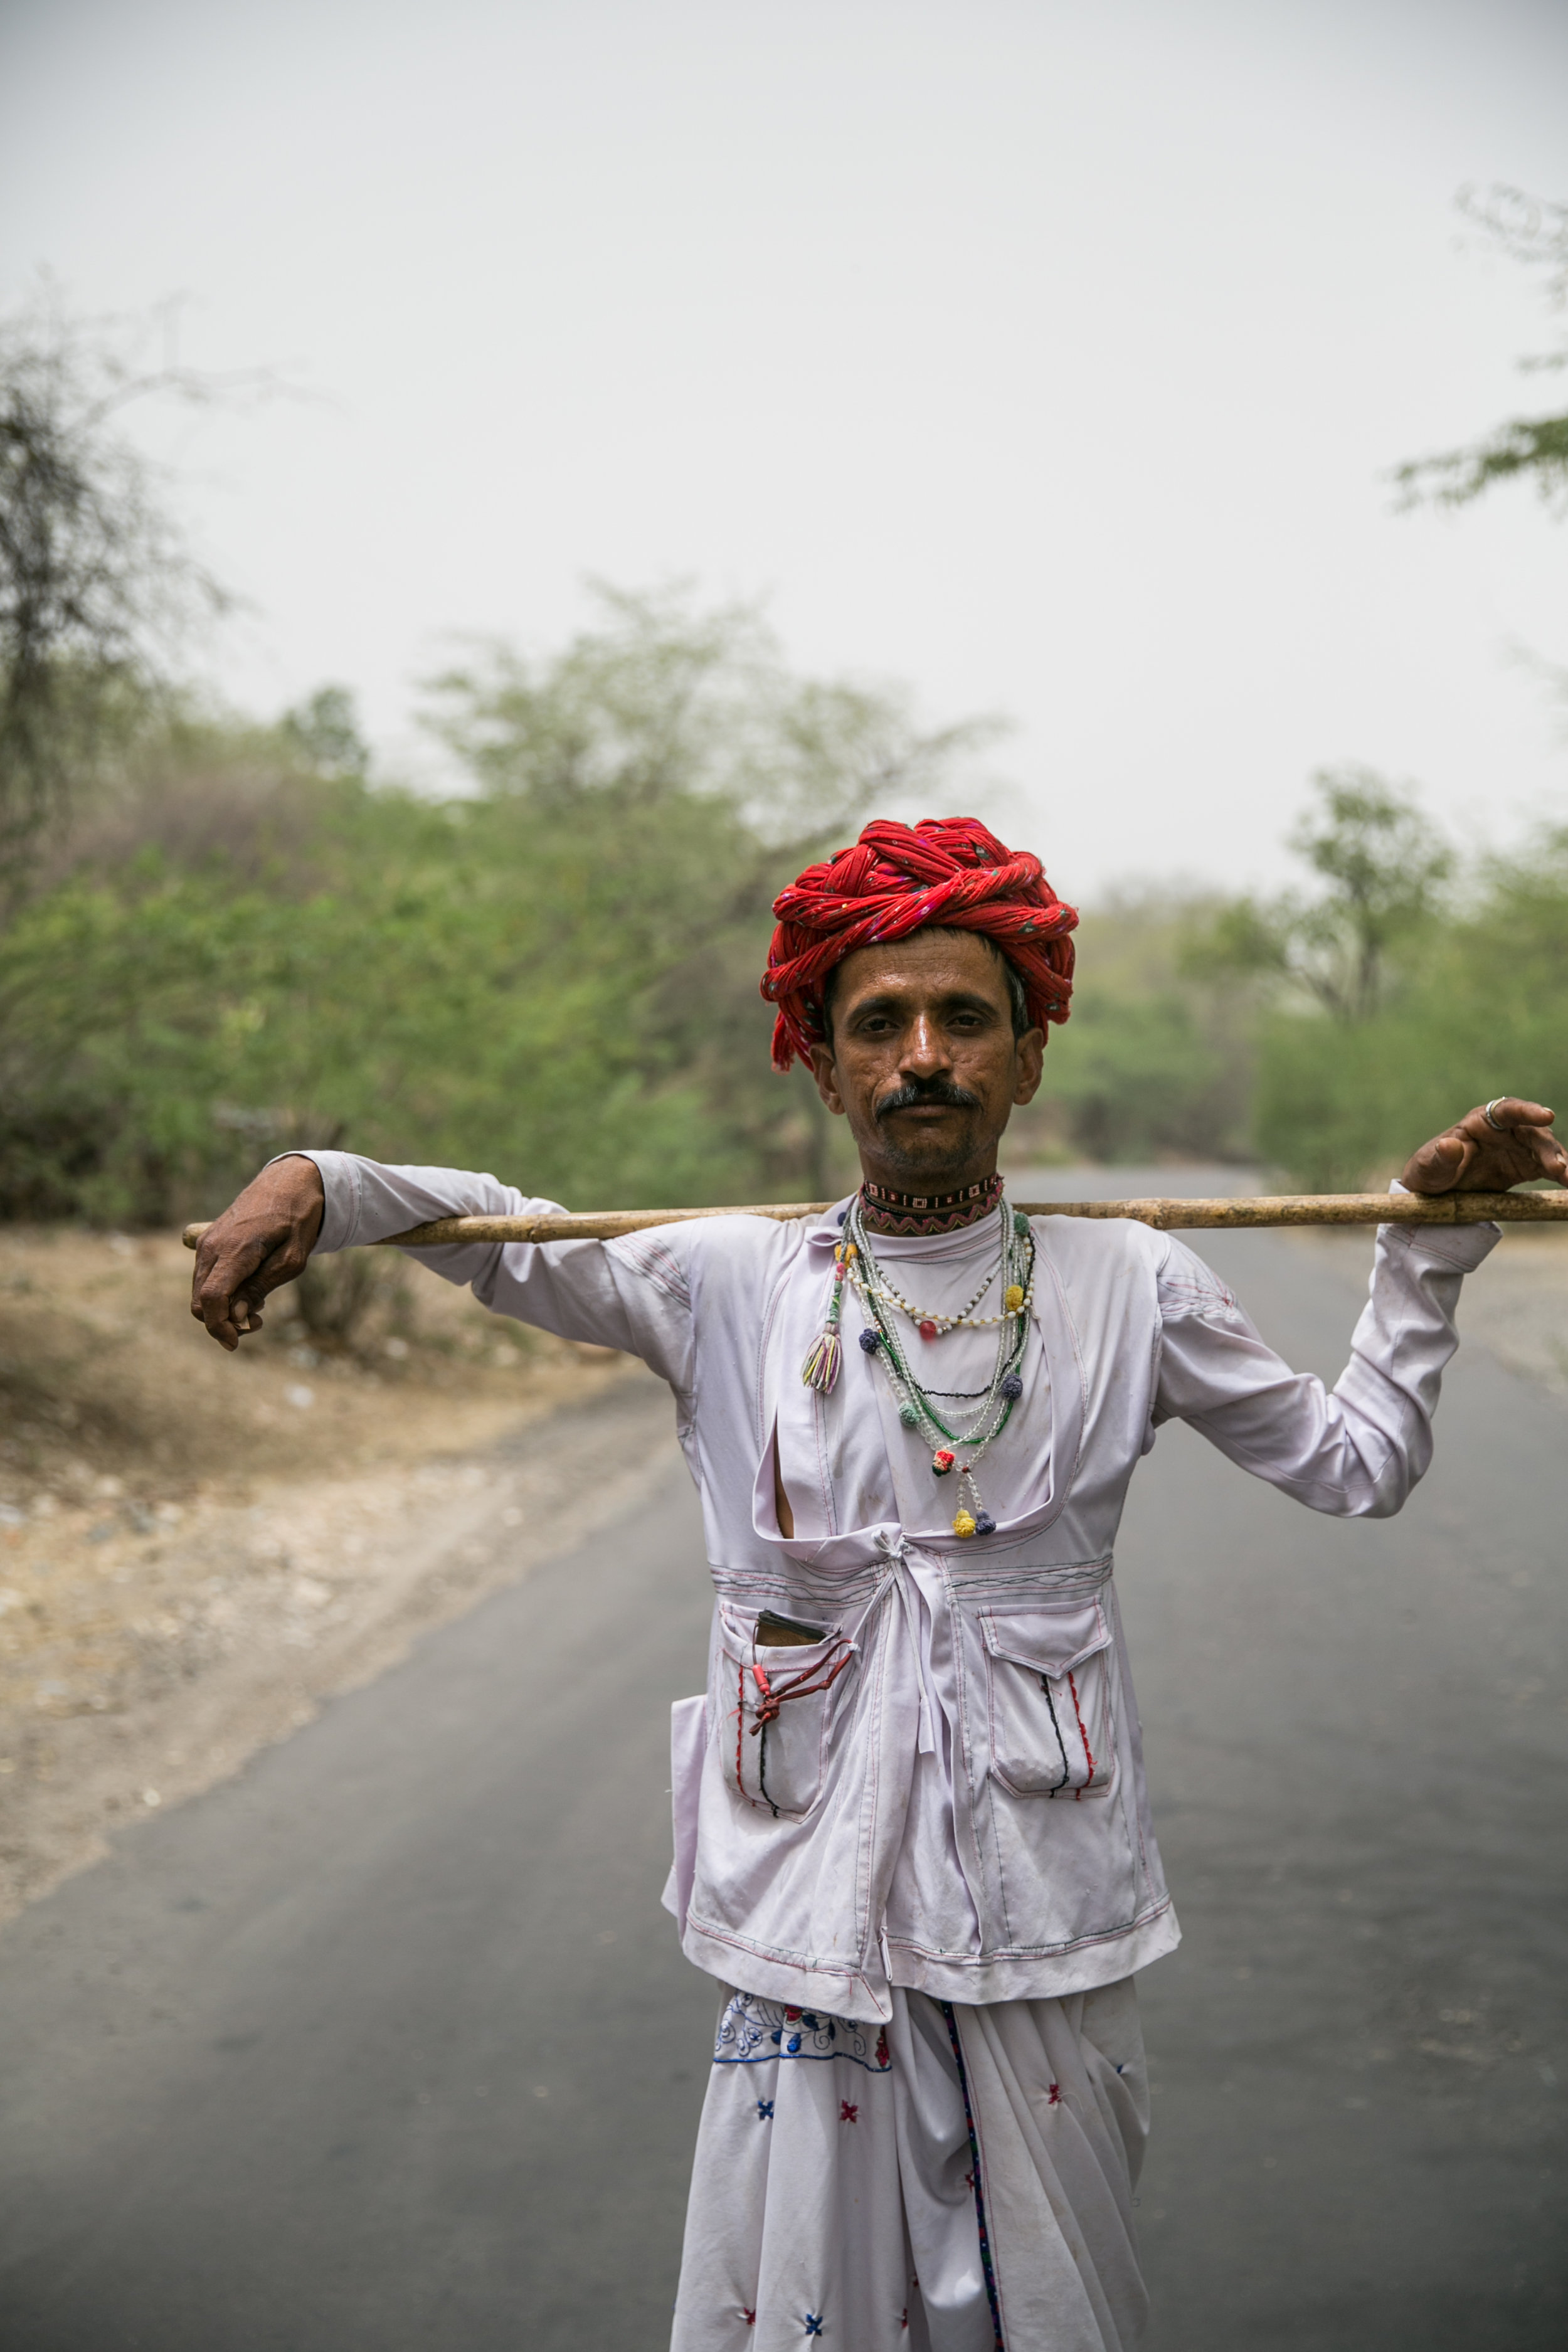  Rajasthan, India 2014 